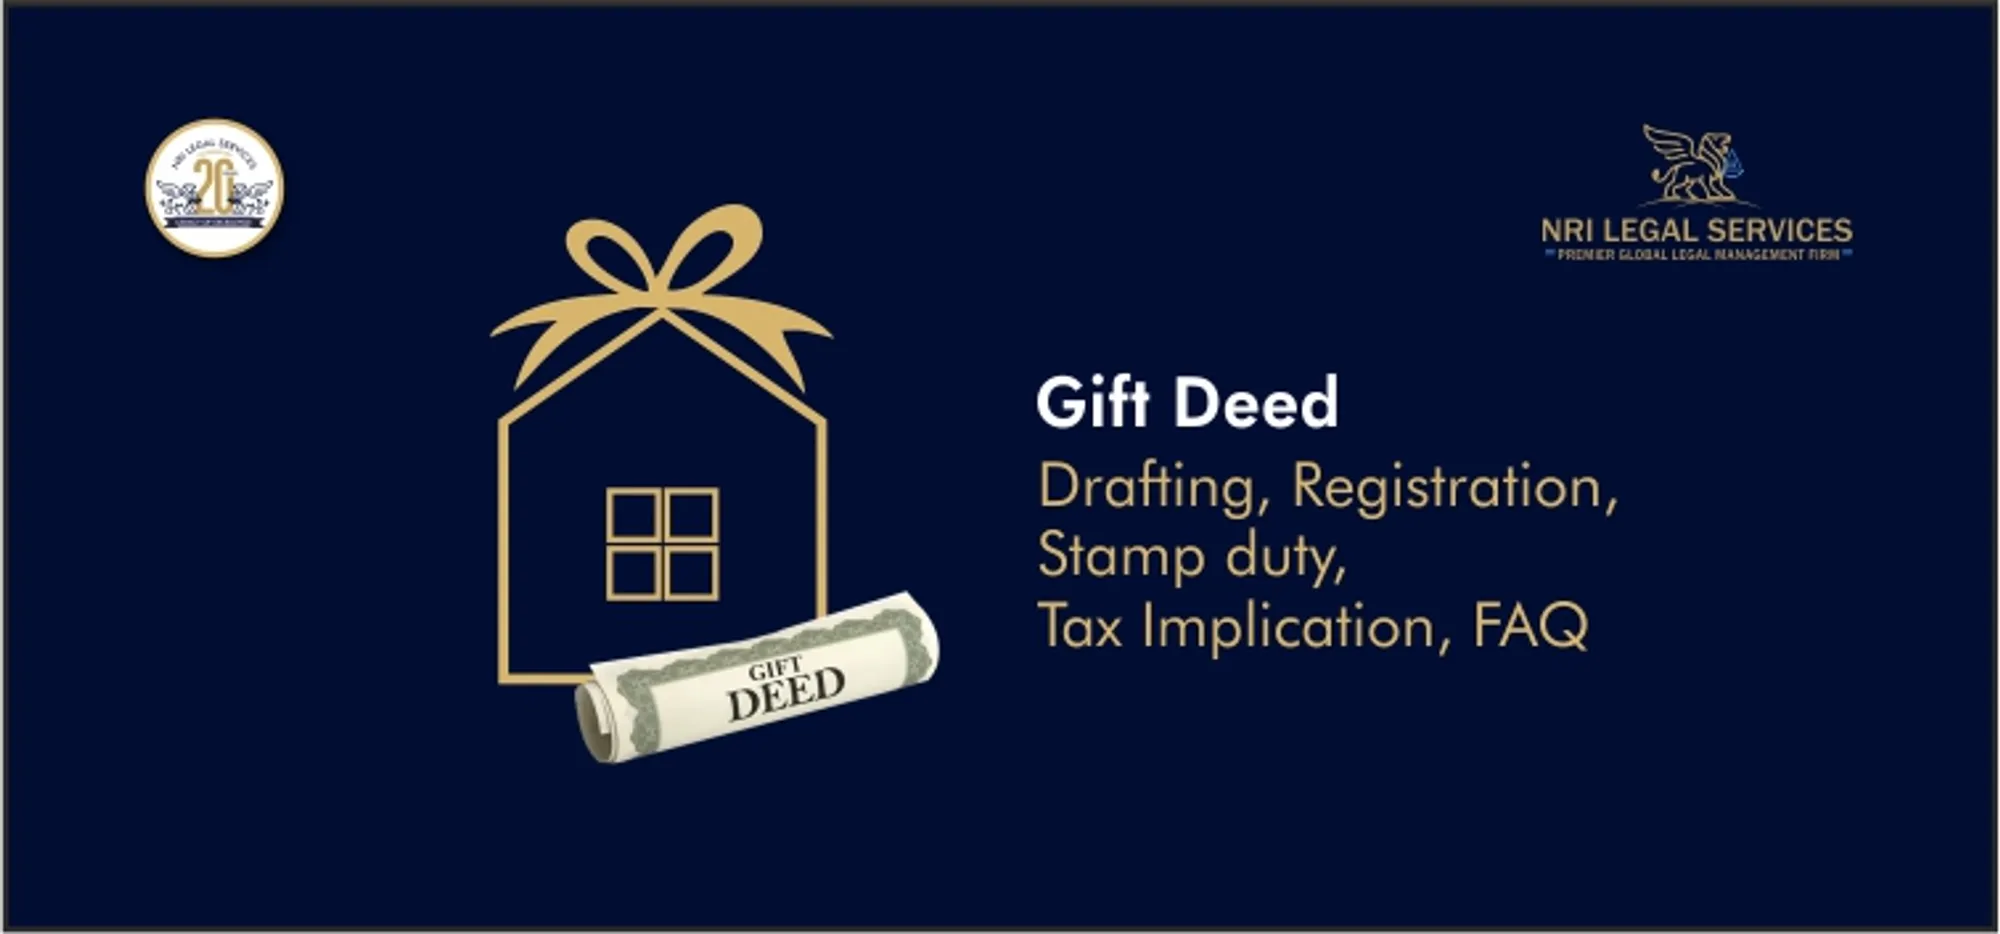 Gift Deed Drafting, Registration, Stamp duty, Tax Implication, FAQ